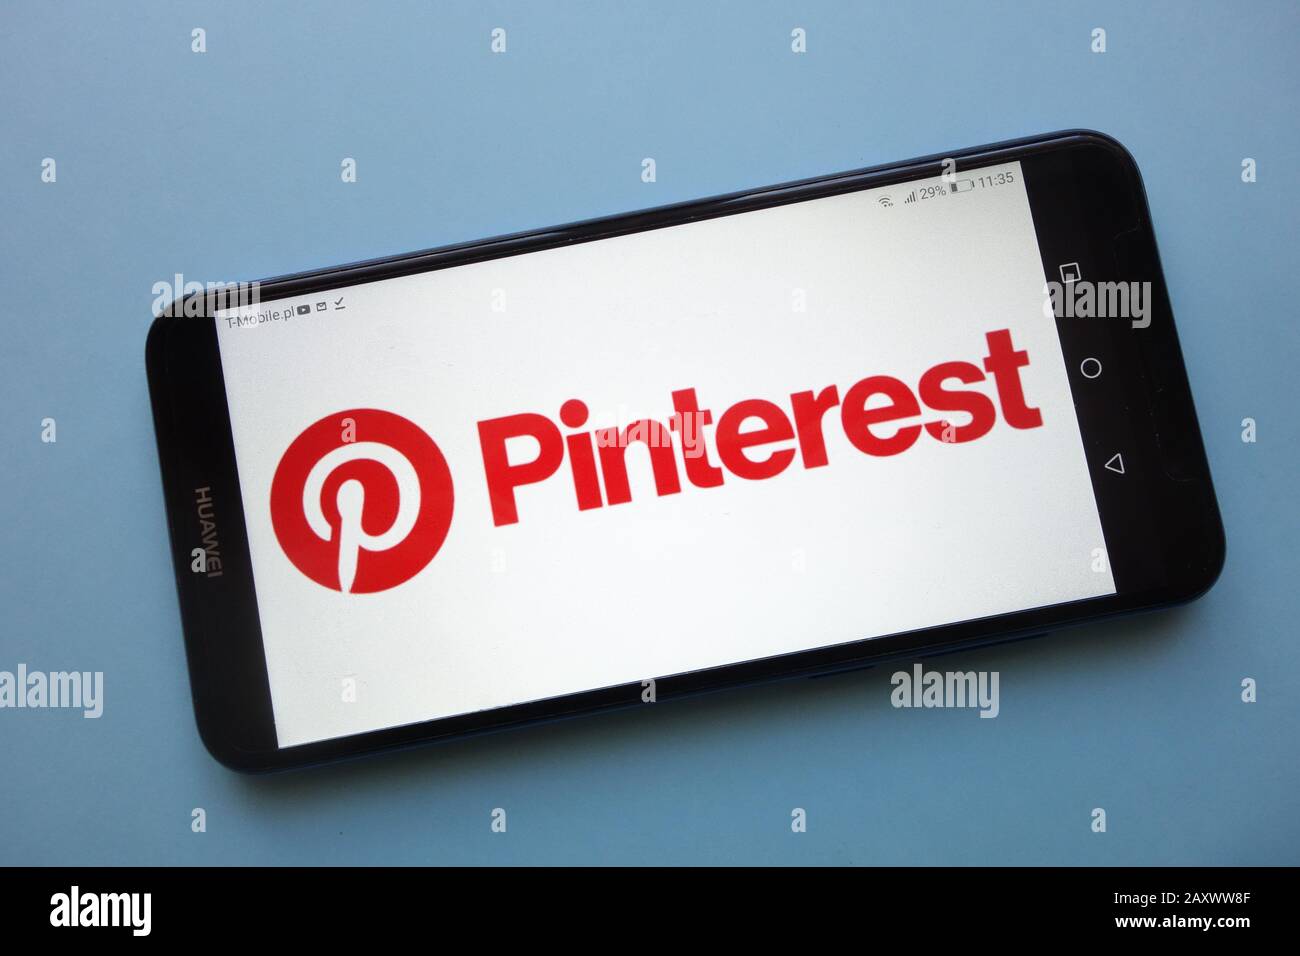 Pinterest logo displayed on smartphone Stock Photo